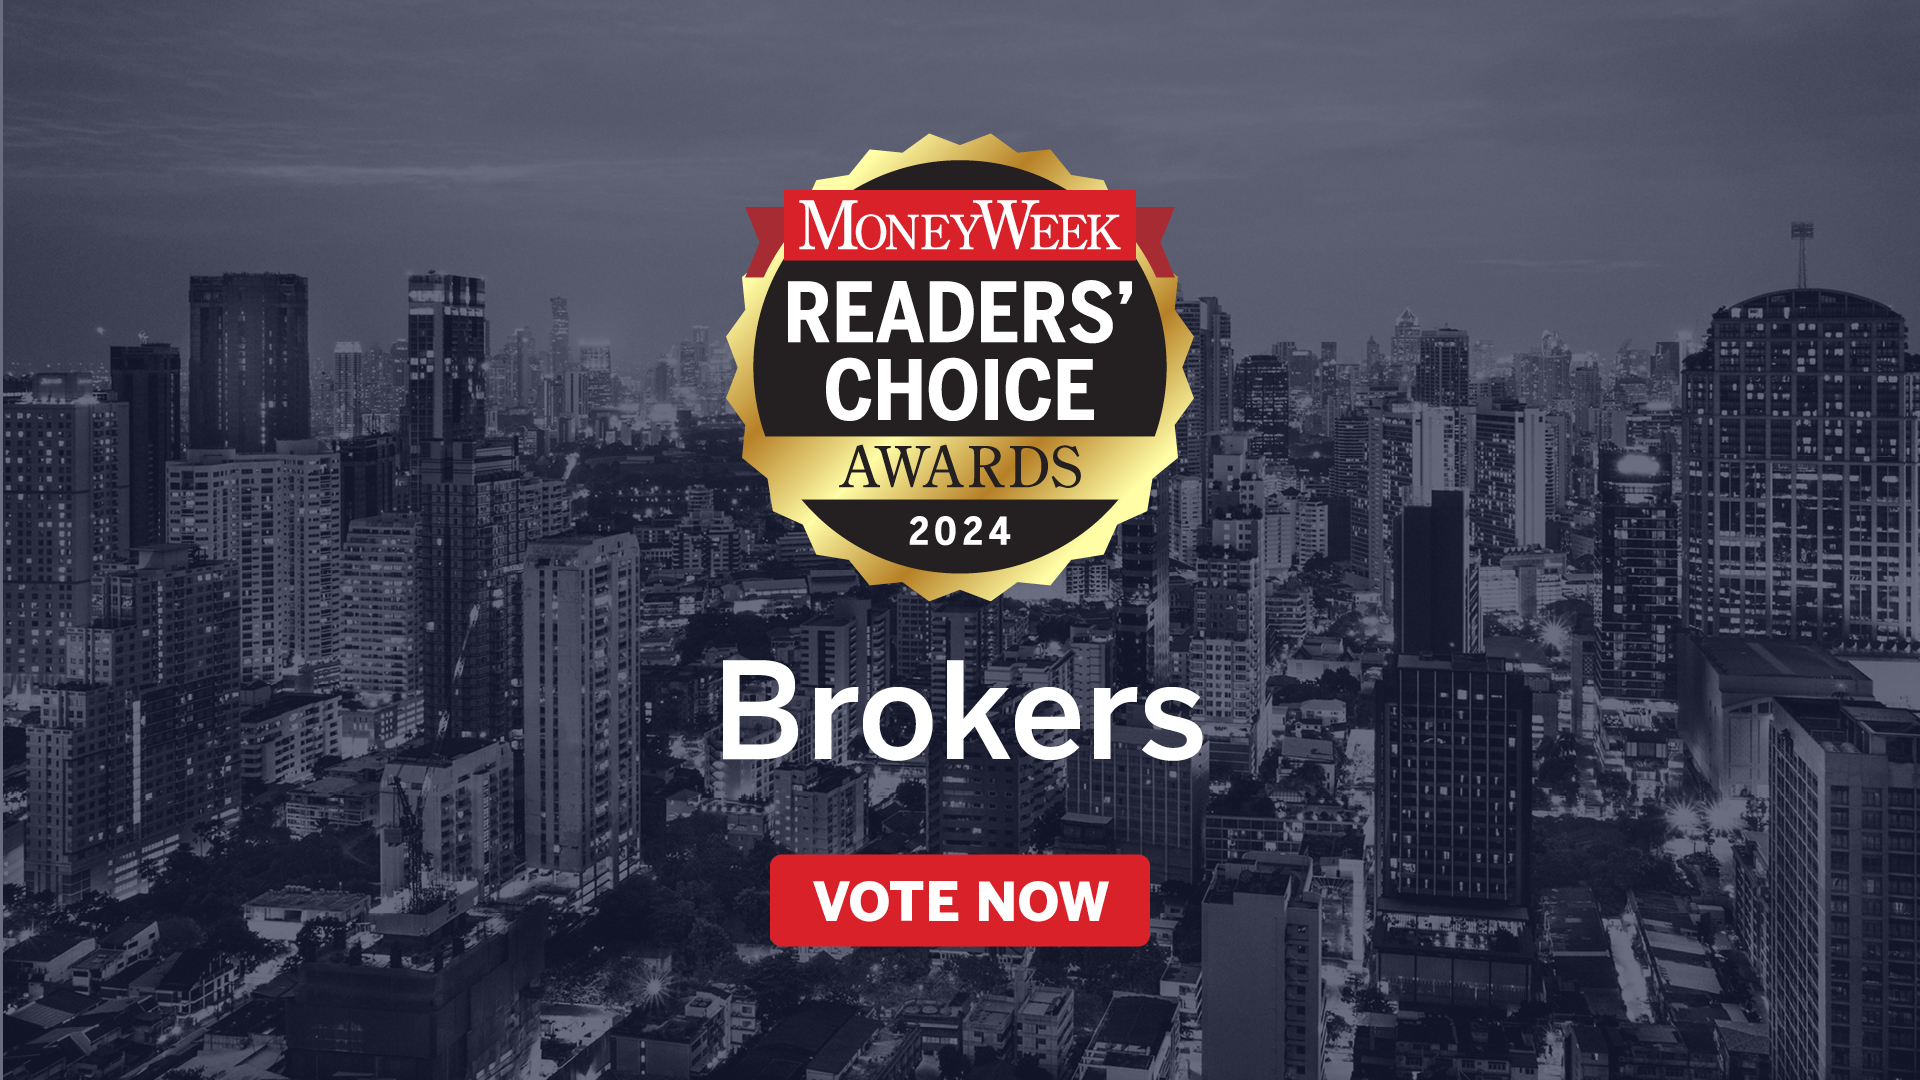 MW Readers' Choice Awards 2024 Brokers